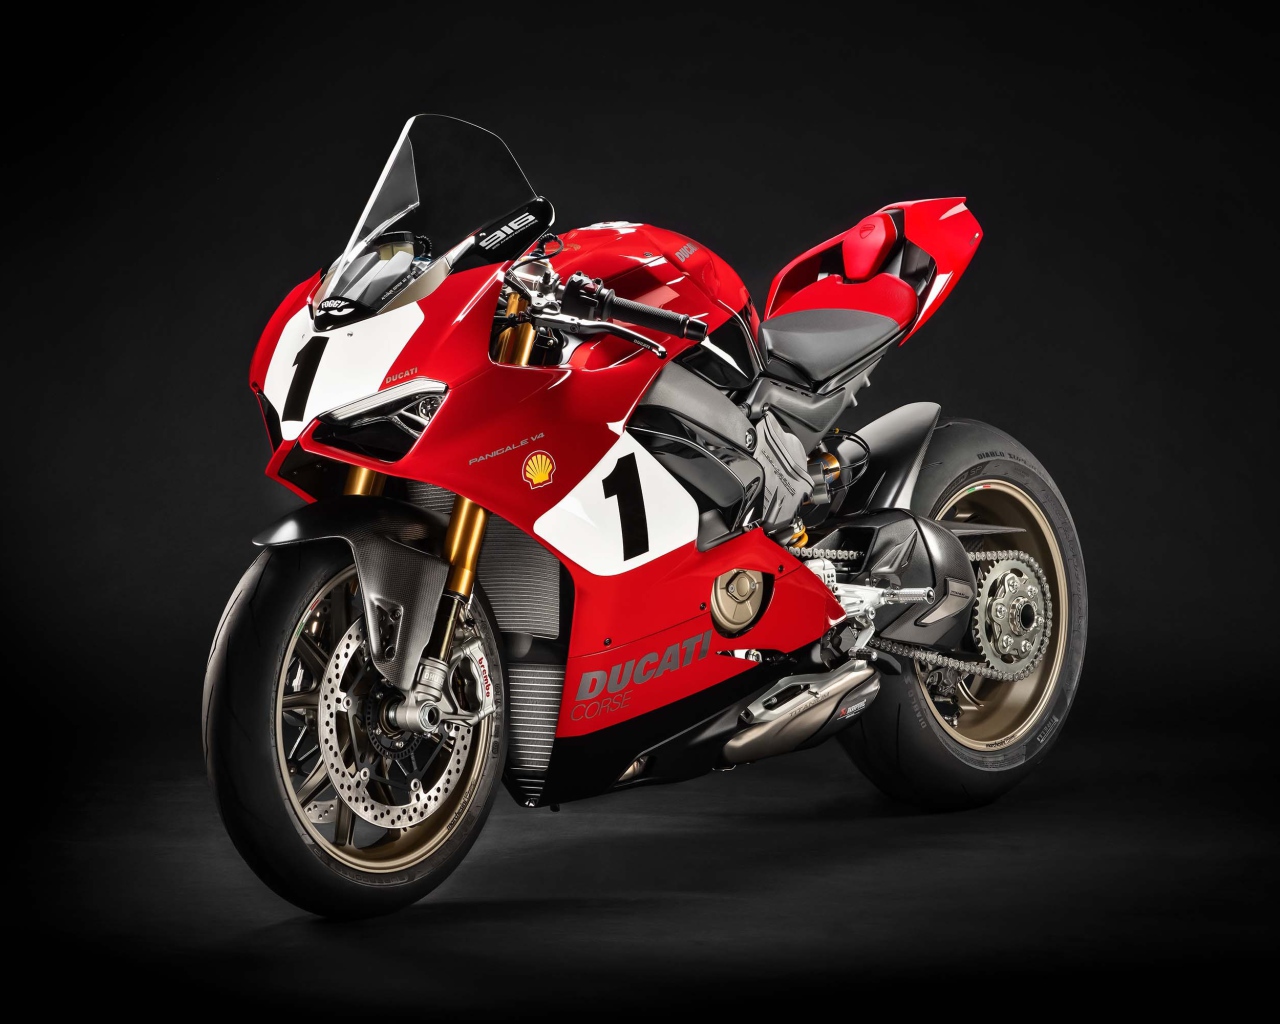 Мотоцикл Ducati Panigale V4 Superbike 2019 года на сером фоне